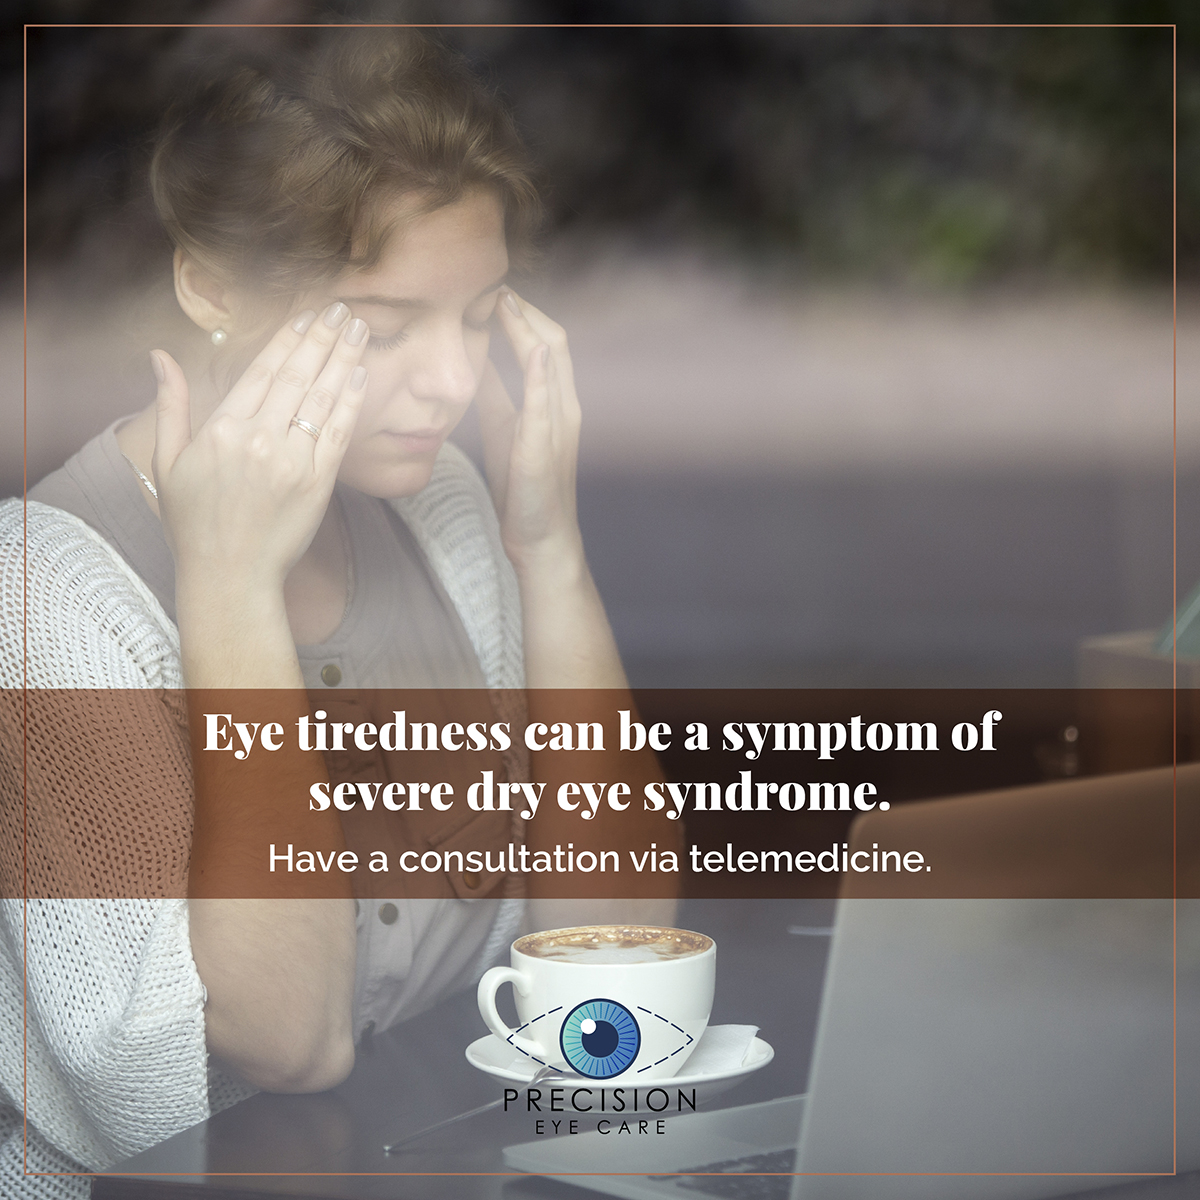 Eye tiredness can be a symptom of severe dry eye syndrome.